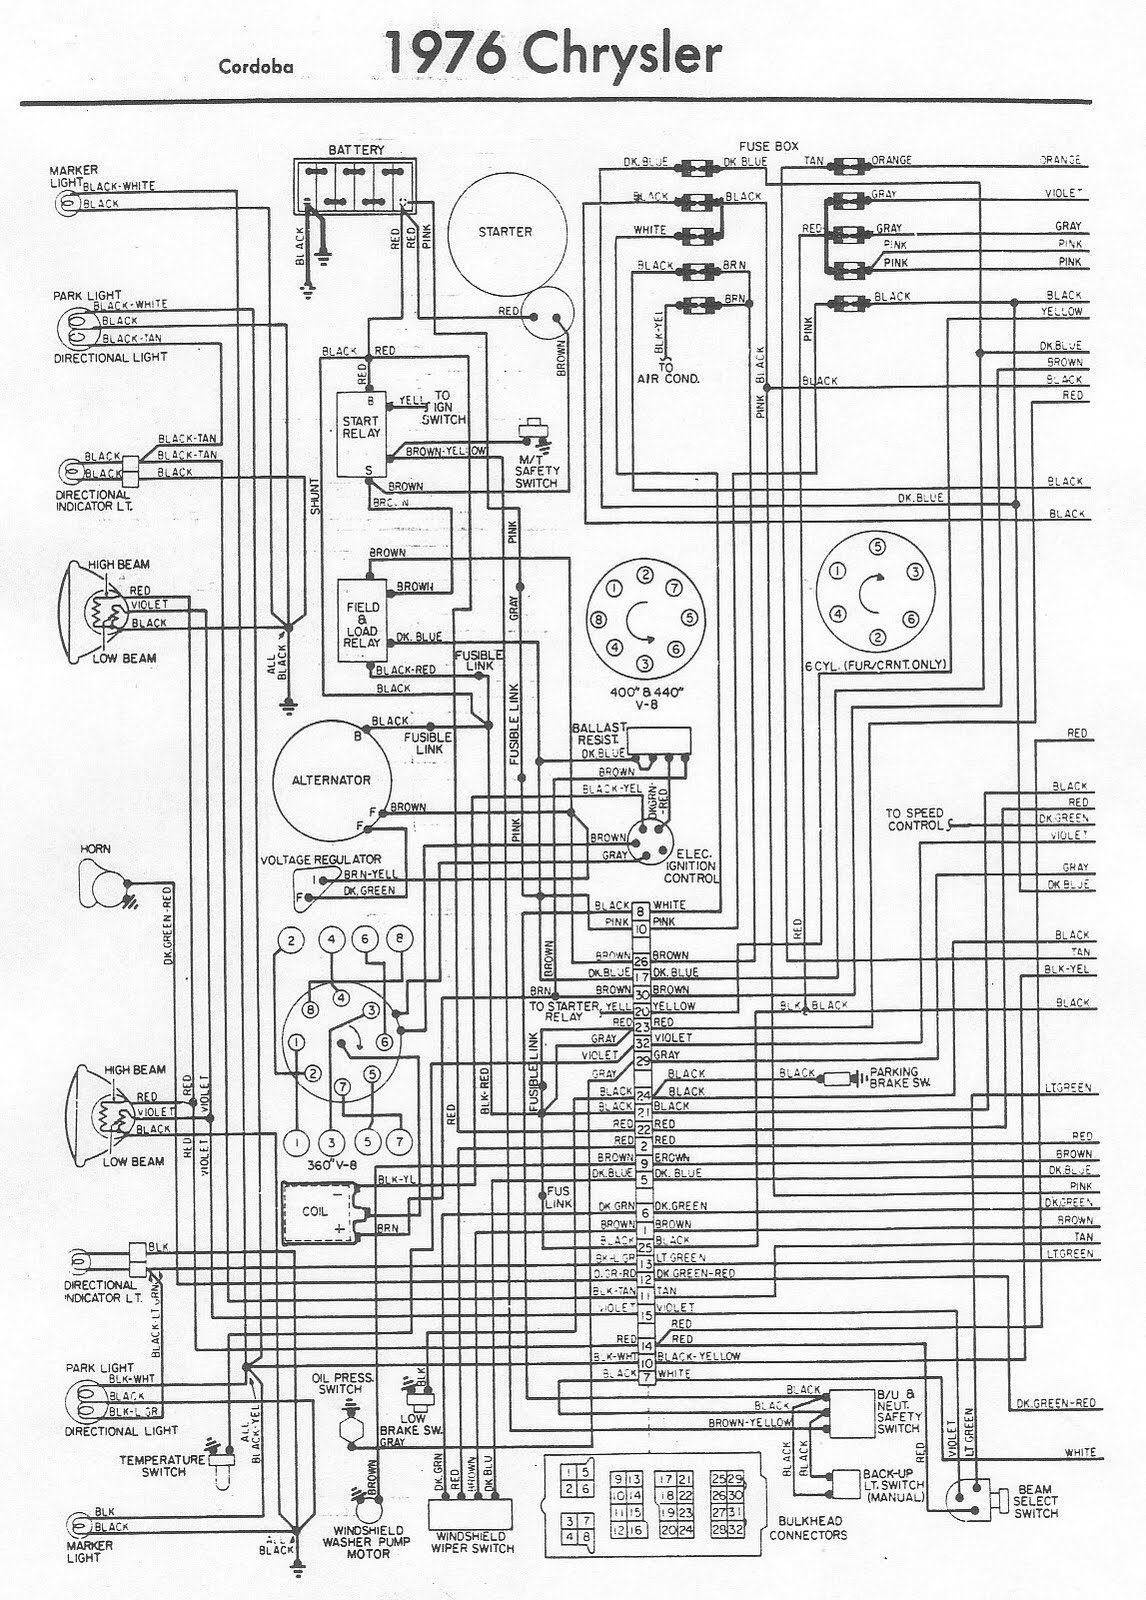 wiring diagram for ta4-snr